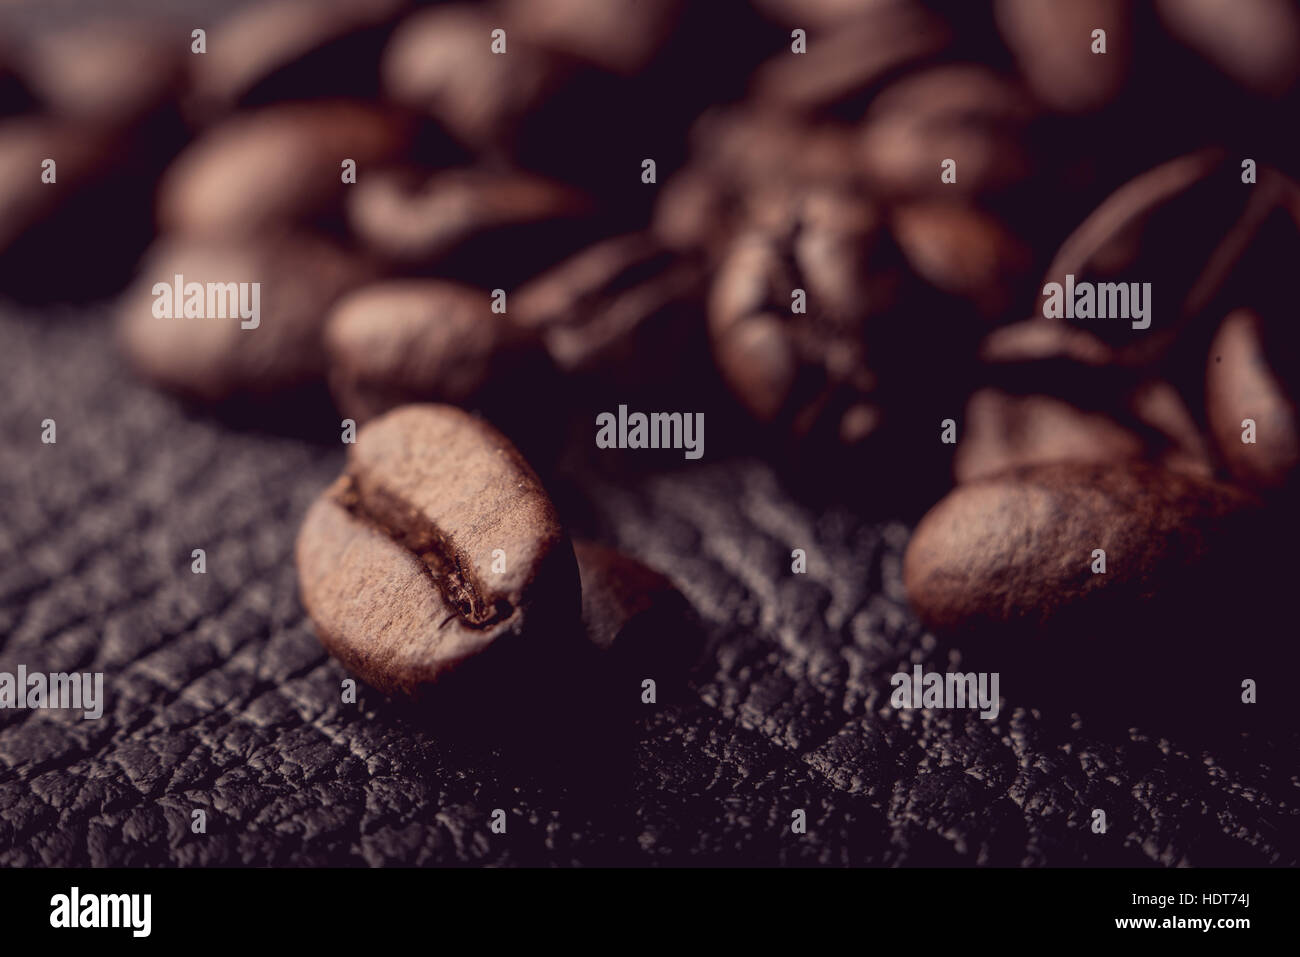 Kaffee Bohnen auf der Lederoberfläche, Makro Pgotography, Café-Konzept Stockfoto